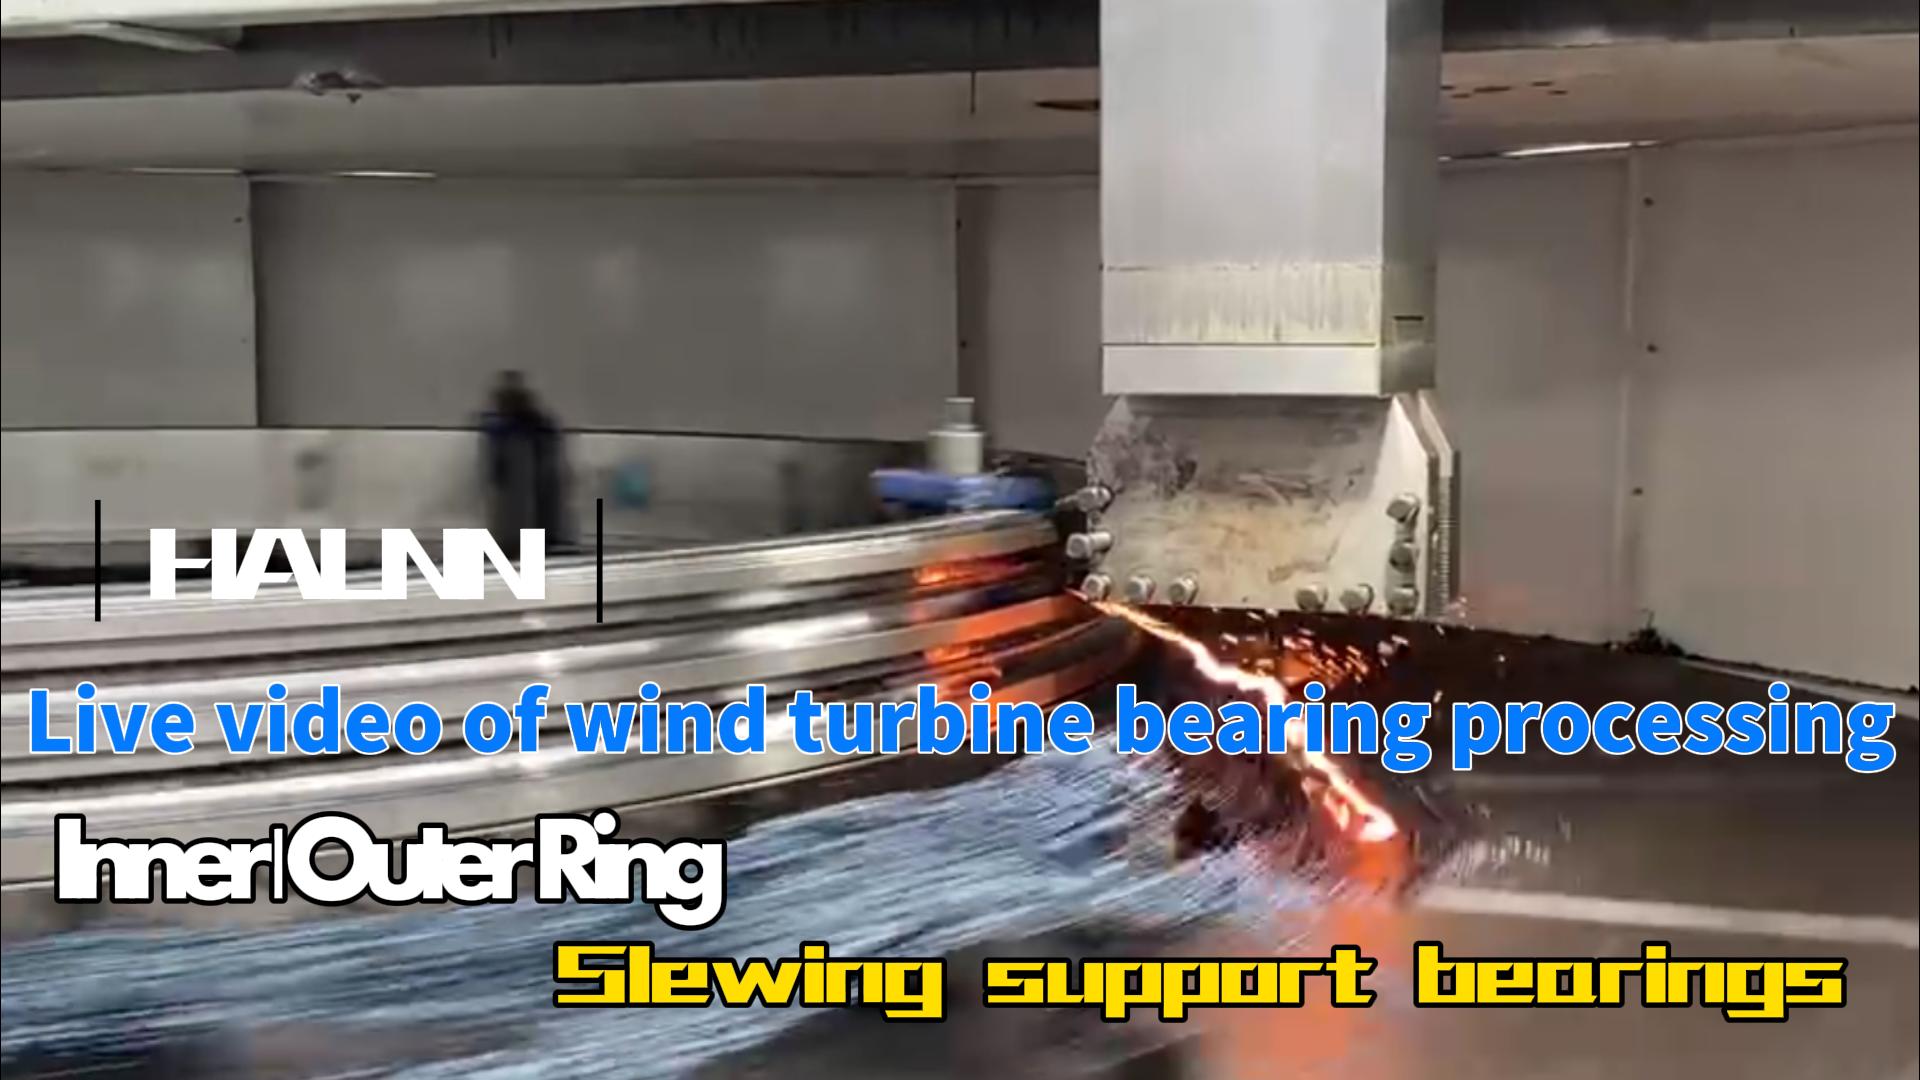 Halnn CBN tools: to solve the wind turbine bearing cutting problem